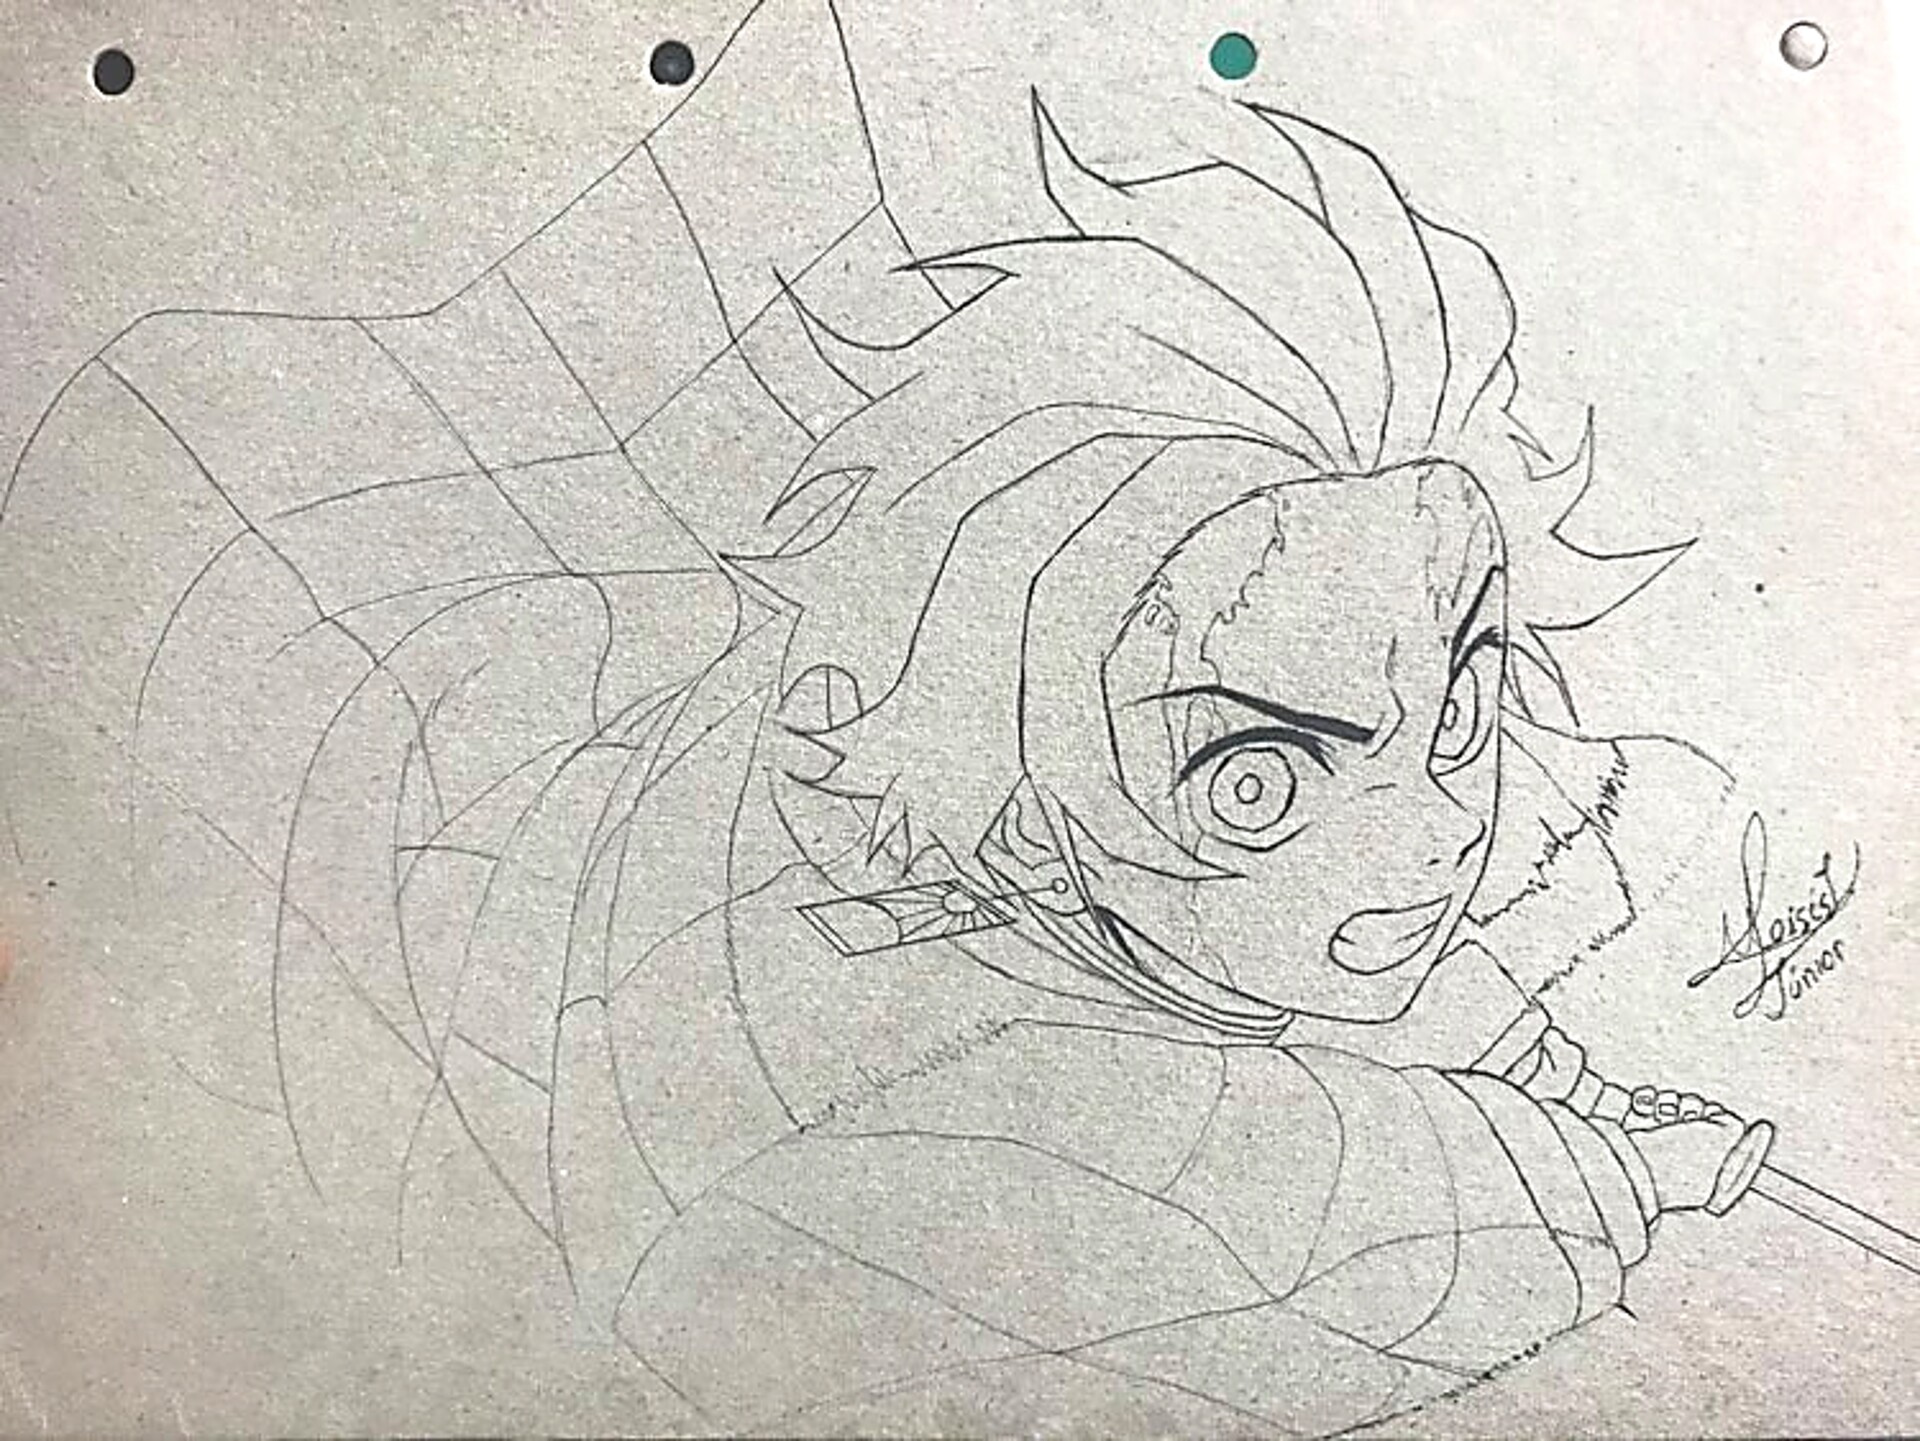 ArtStation - Tanjiro pencil drawing